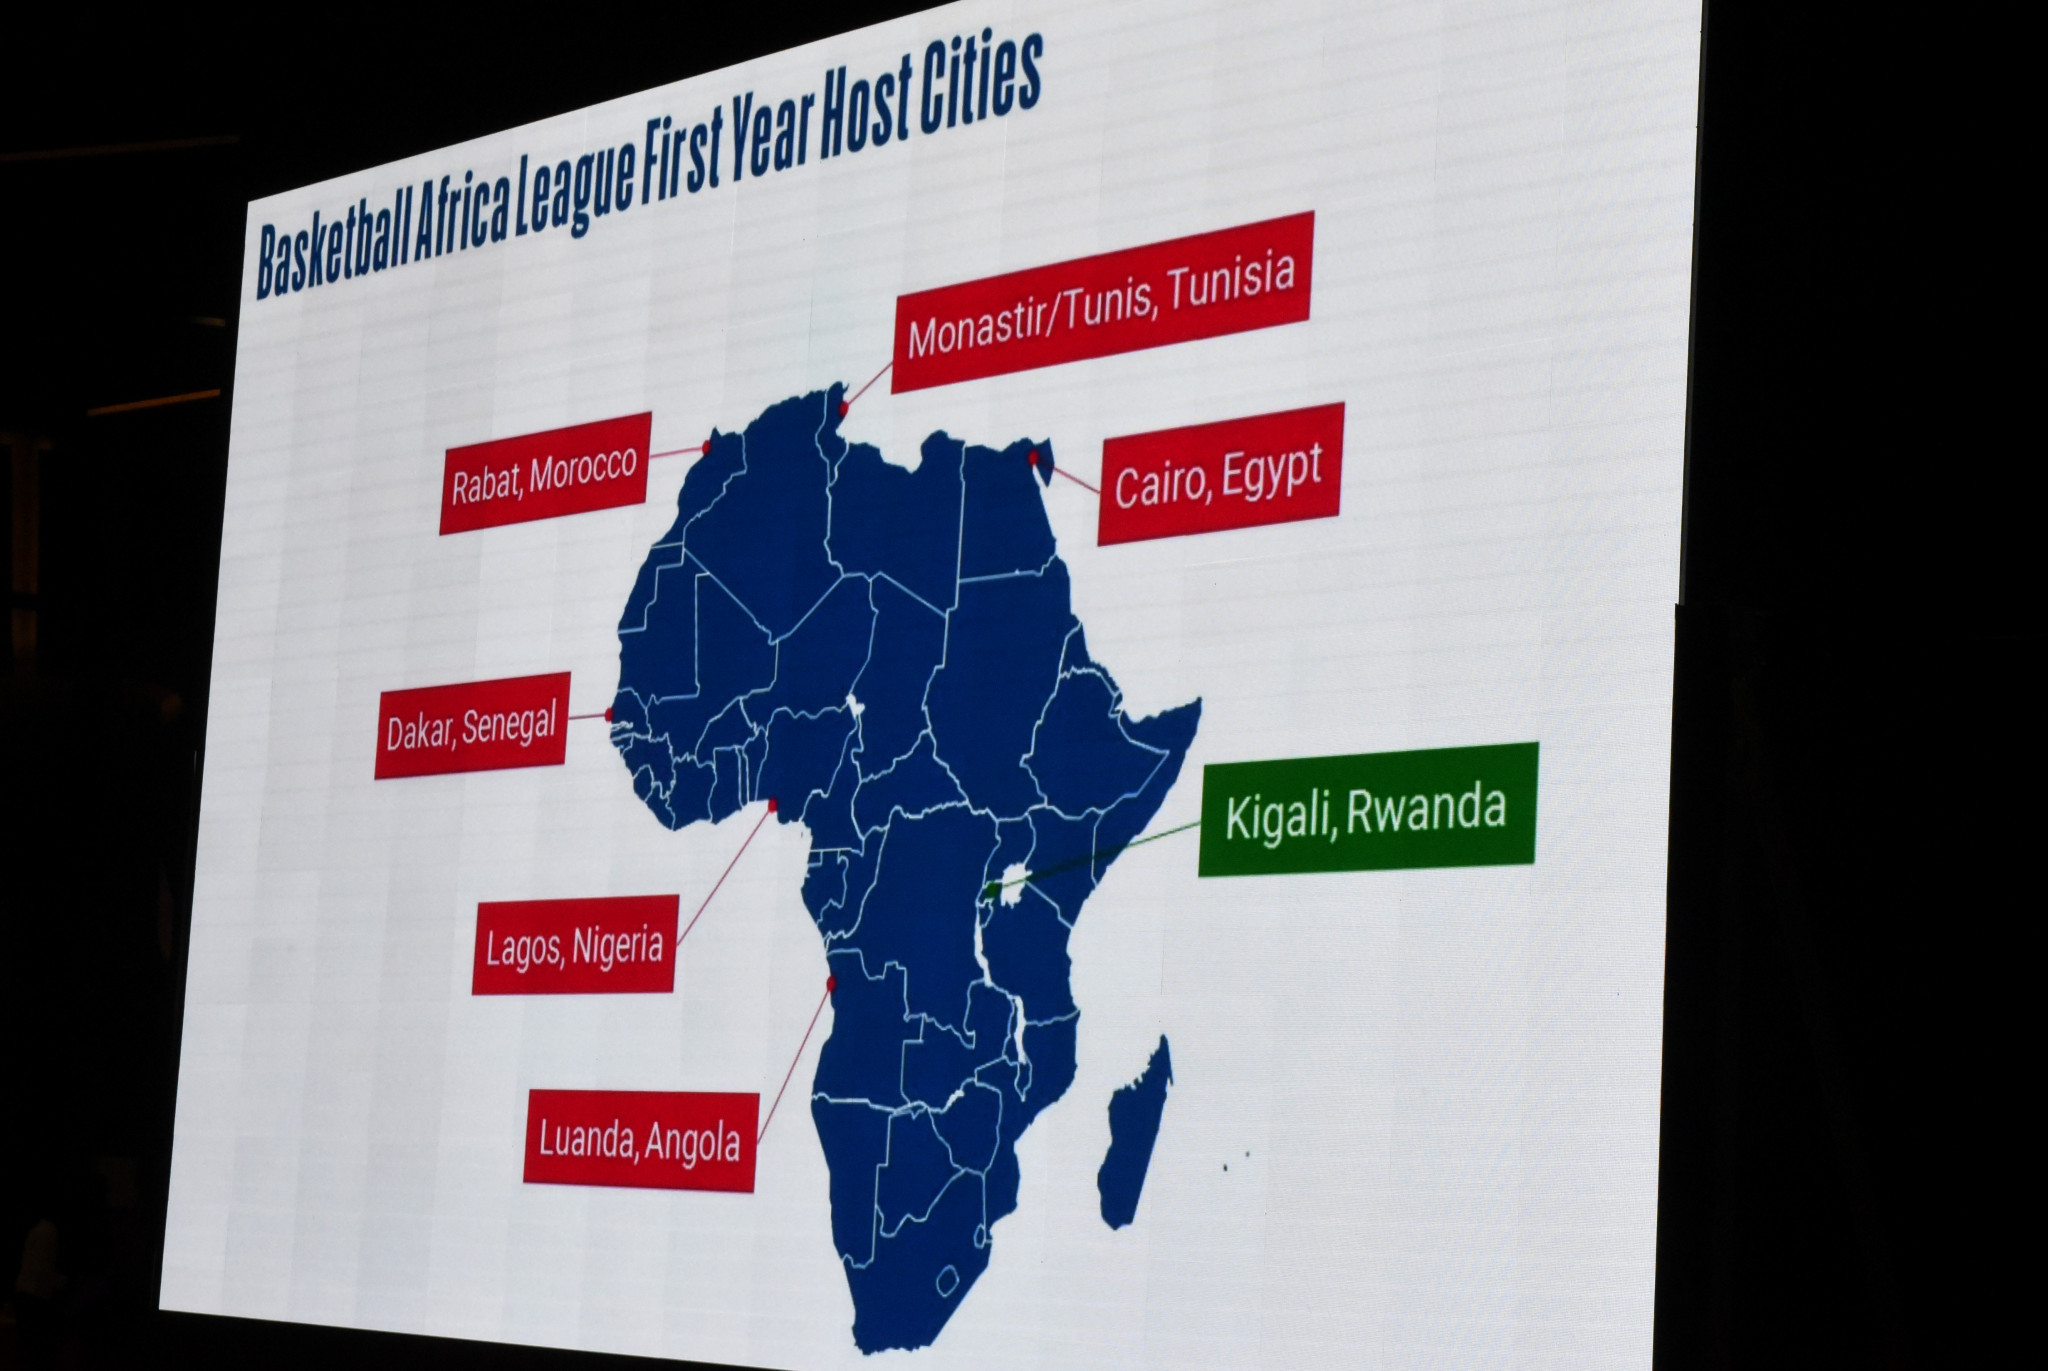 Basketball Africa League announces seven host cities for inaugural season